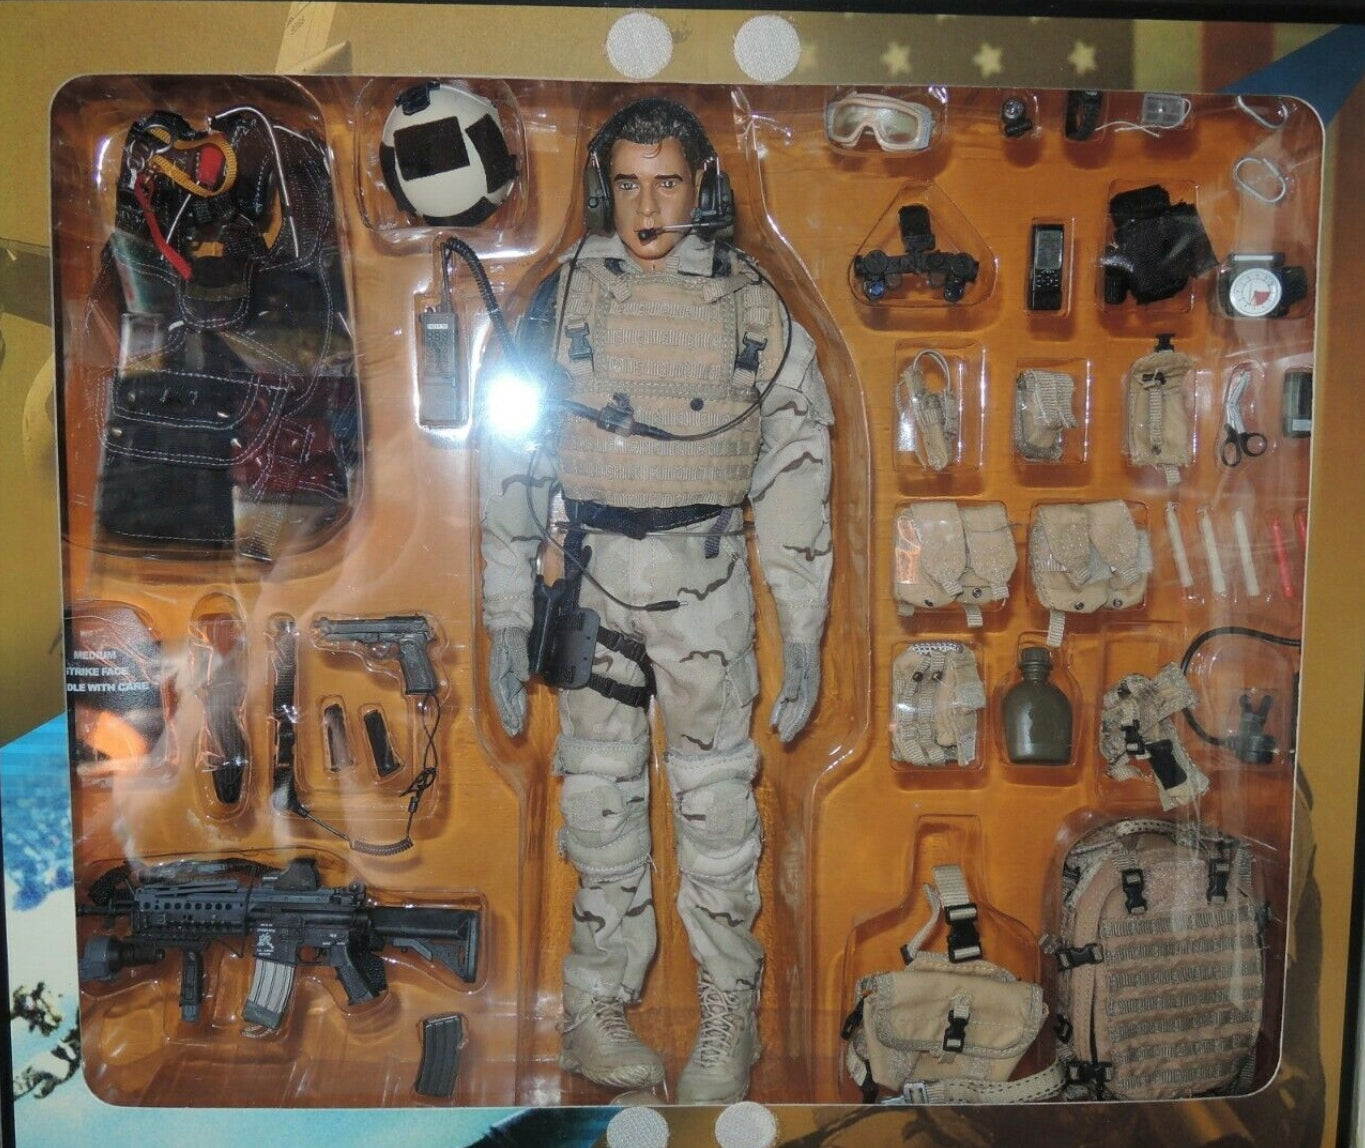 Hot Toys 1/6 12" U.S. Navy Seal Team 2 Halo Jumper Action Figure